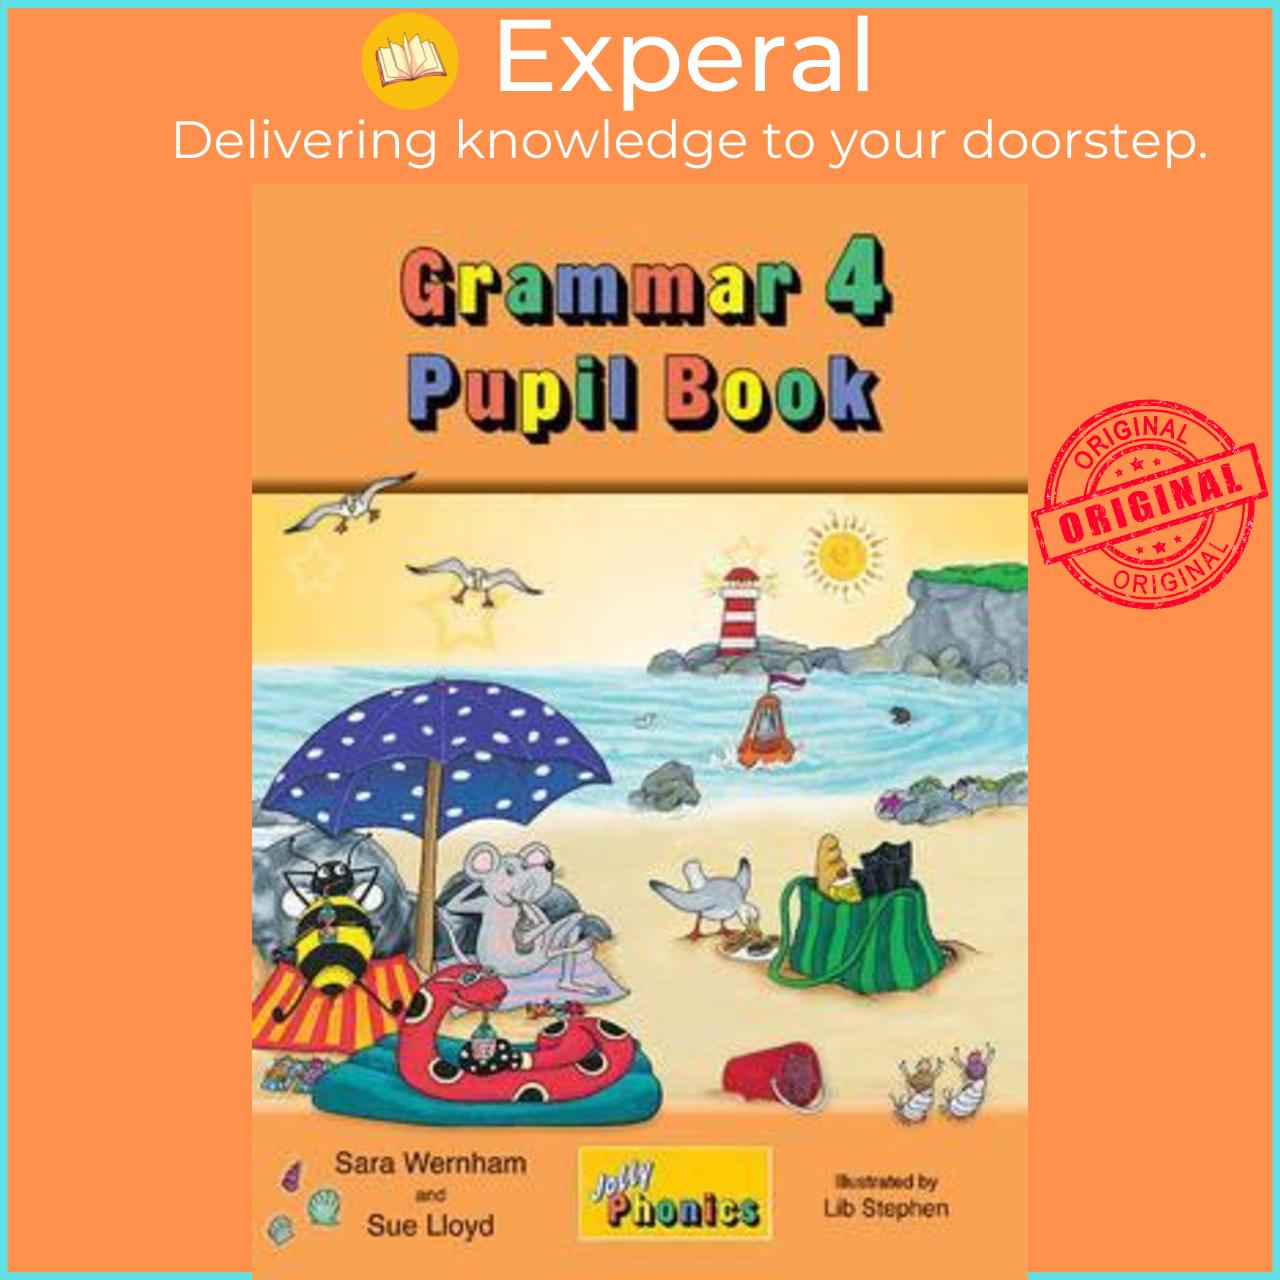 Sách - Grammar 4 Pupil Book : In Precursive Letters (British English edition) by Sara Wernham (UK edition, paperback)